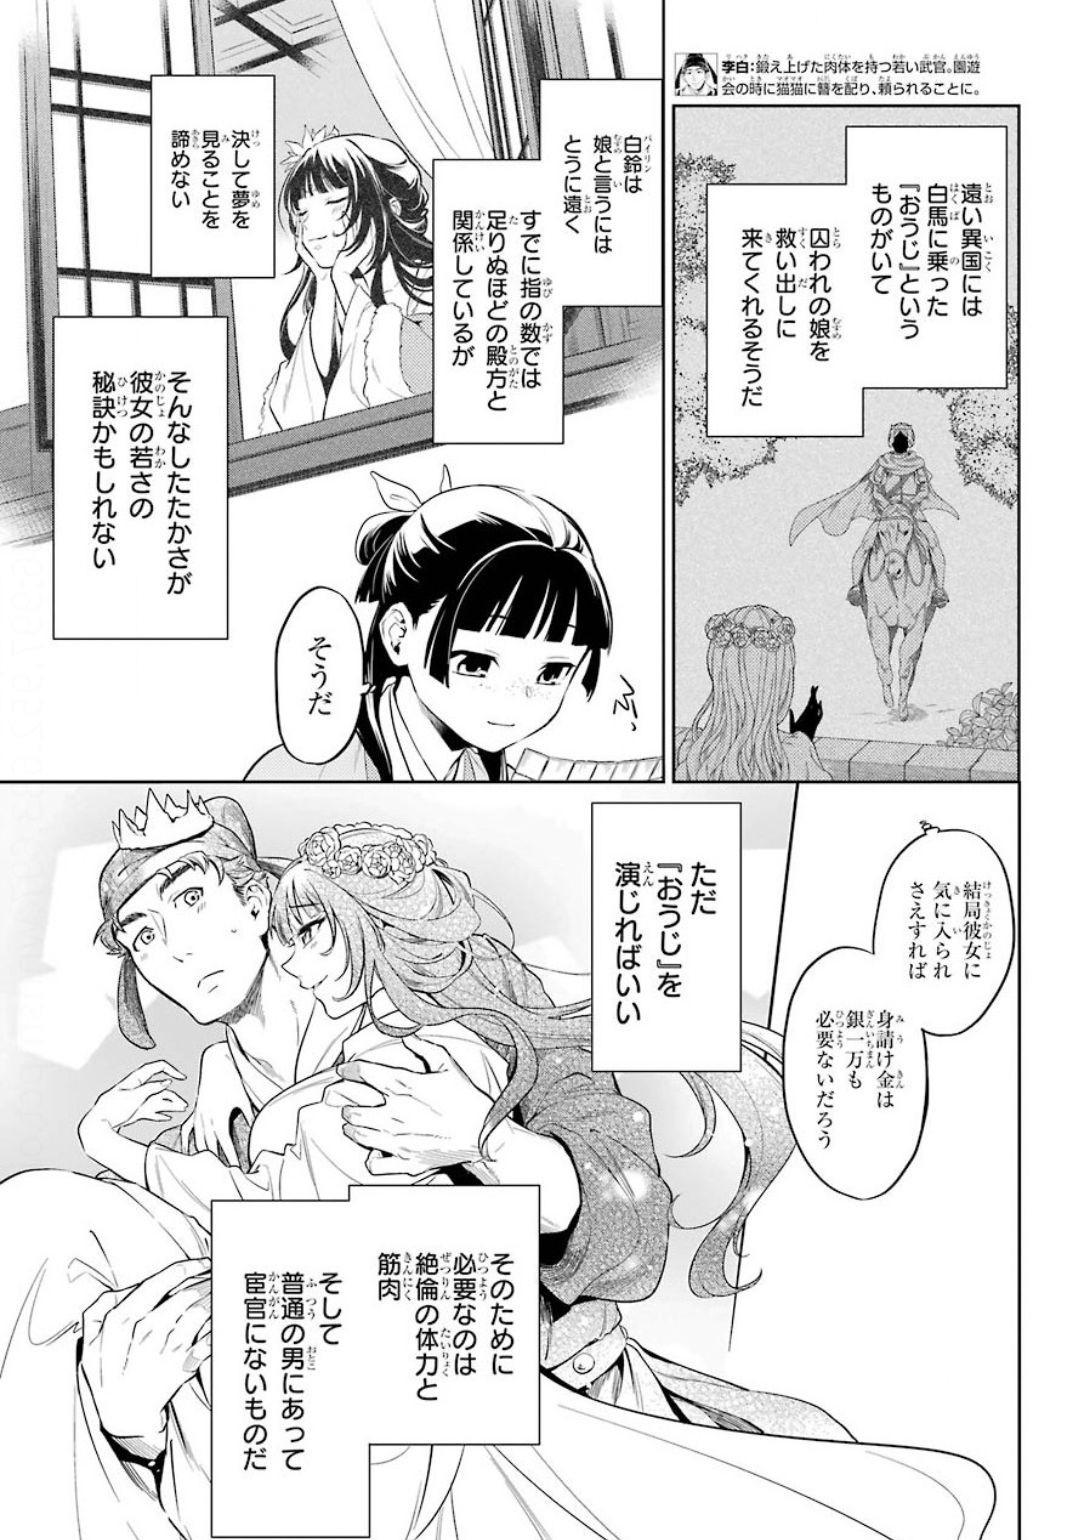 Kusuriya no Hitorigoto - Chapter 36-1 - Page 3